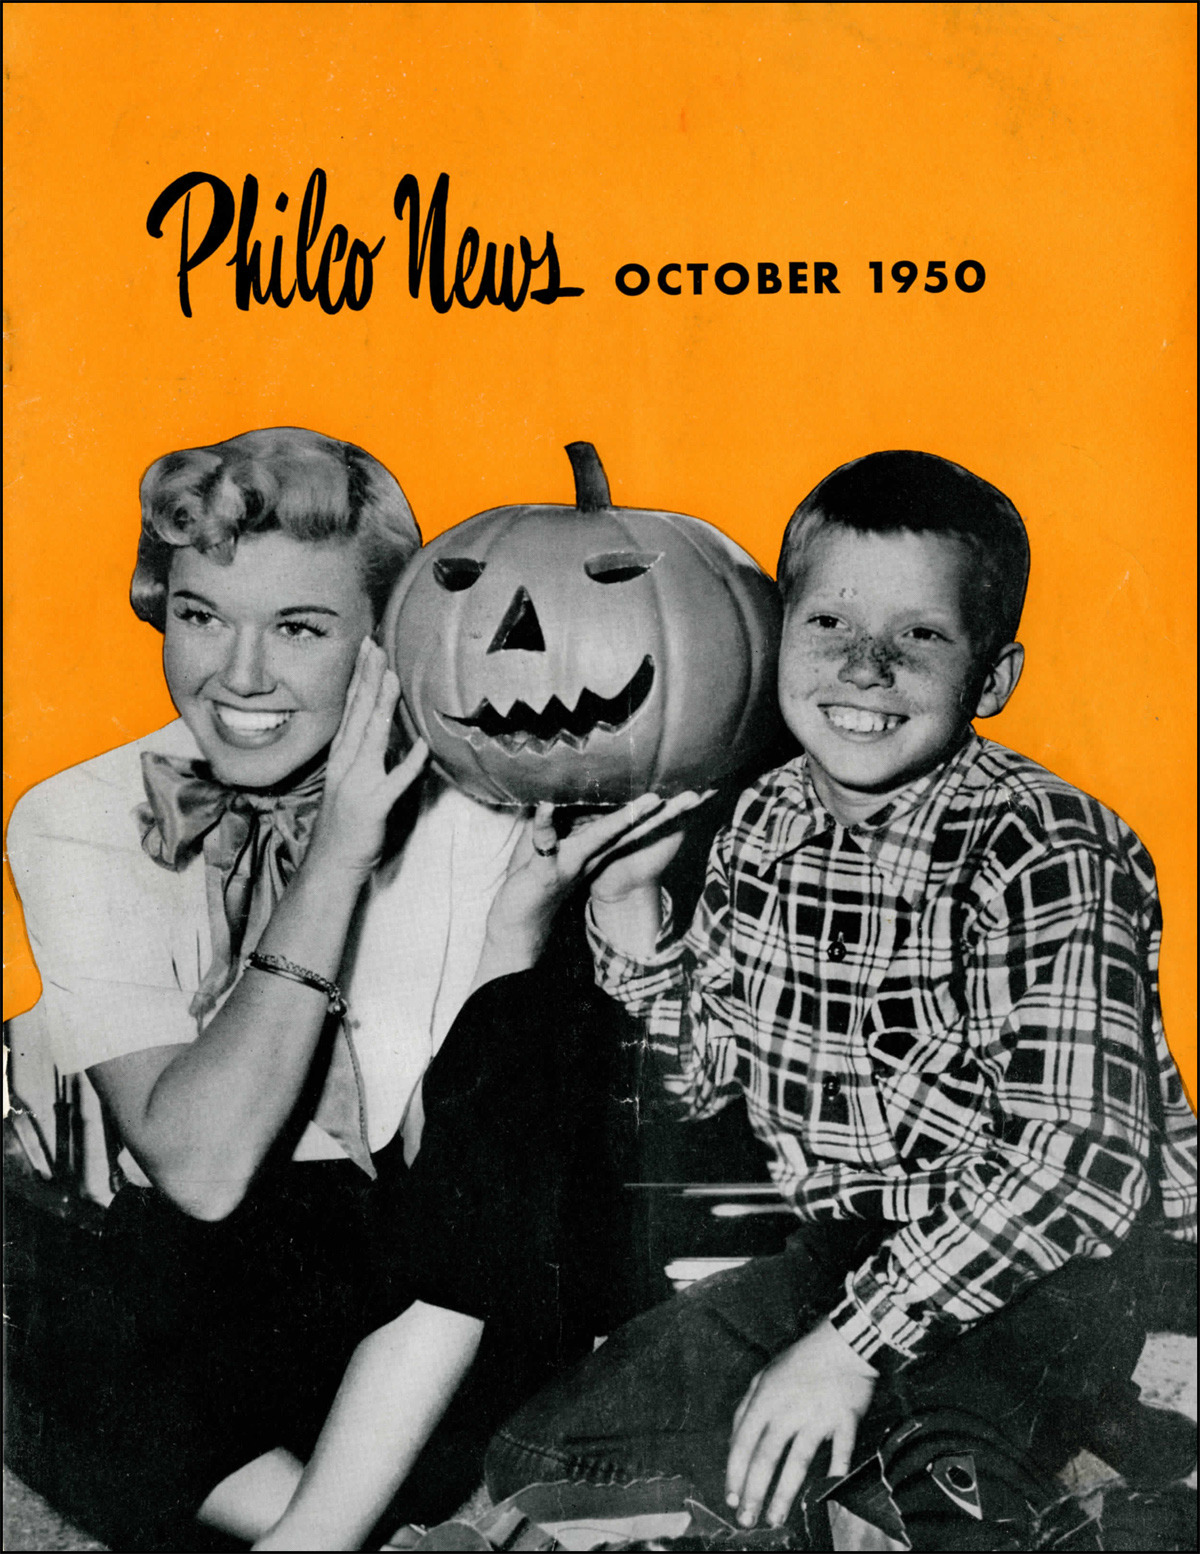 Philco News featuring Doris Day and son Terry Melcher - October 1950